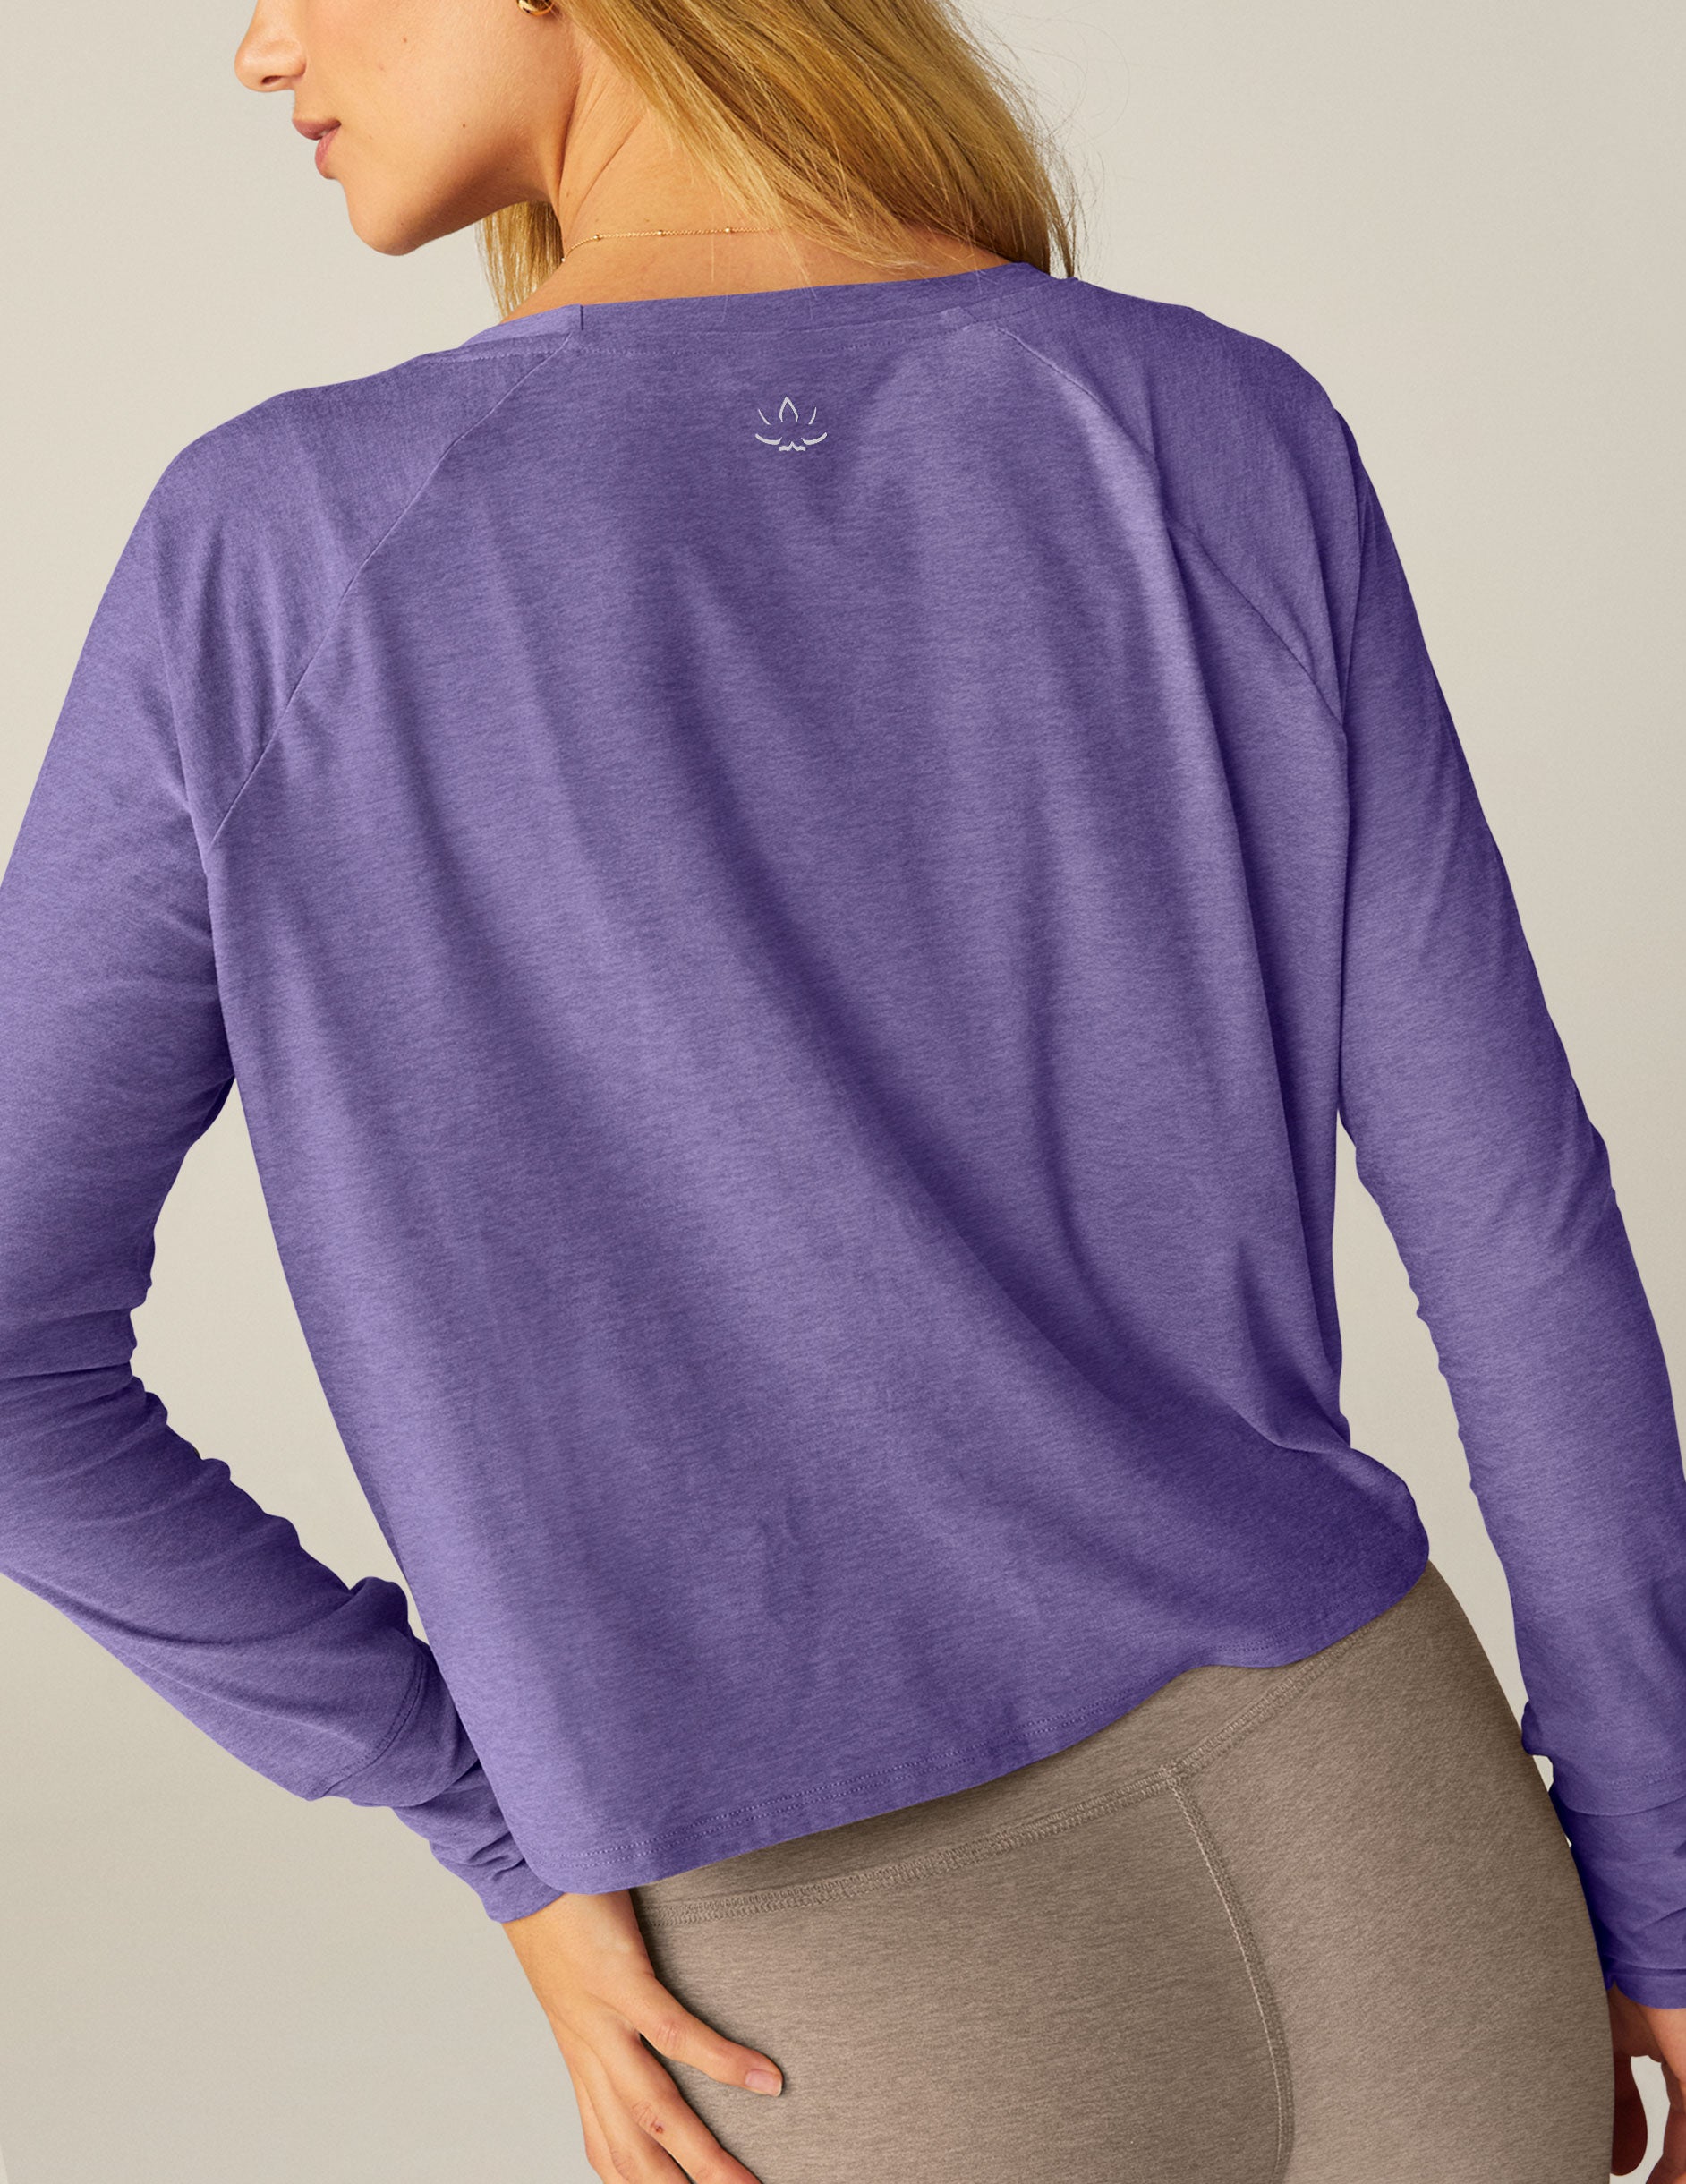 purple long sleeve crew neck top. 